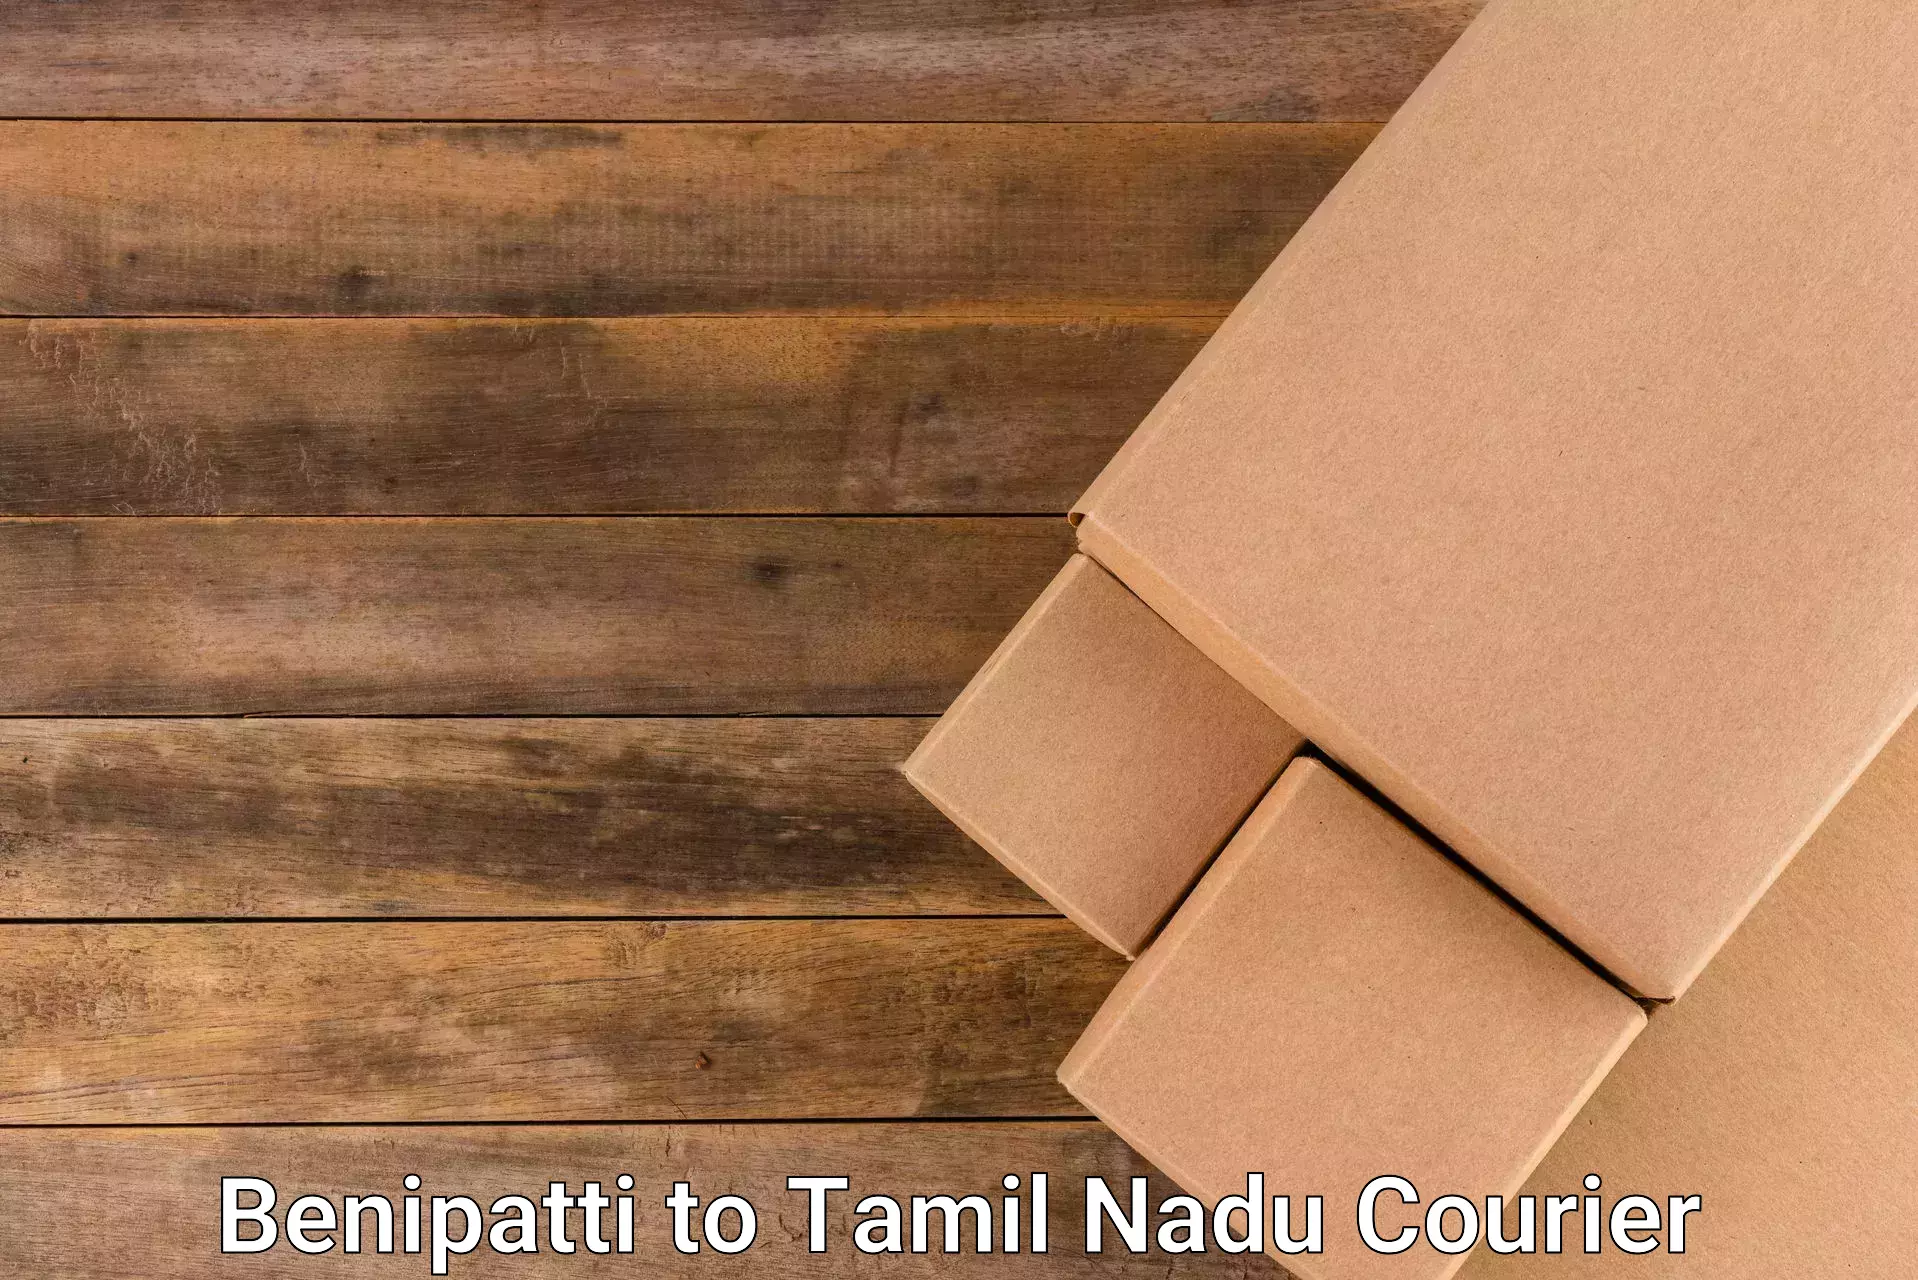 Global courier networks Benipatti to Tamil Nadu